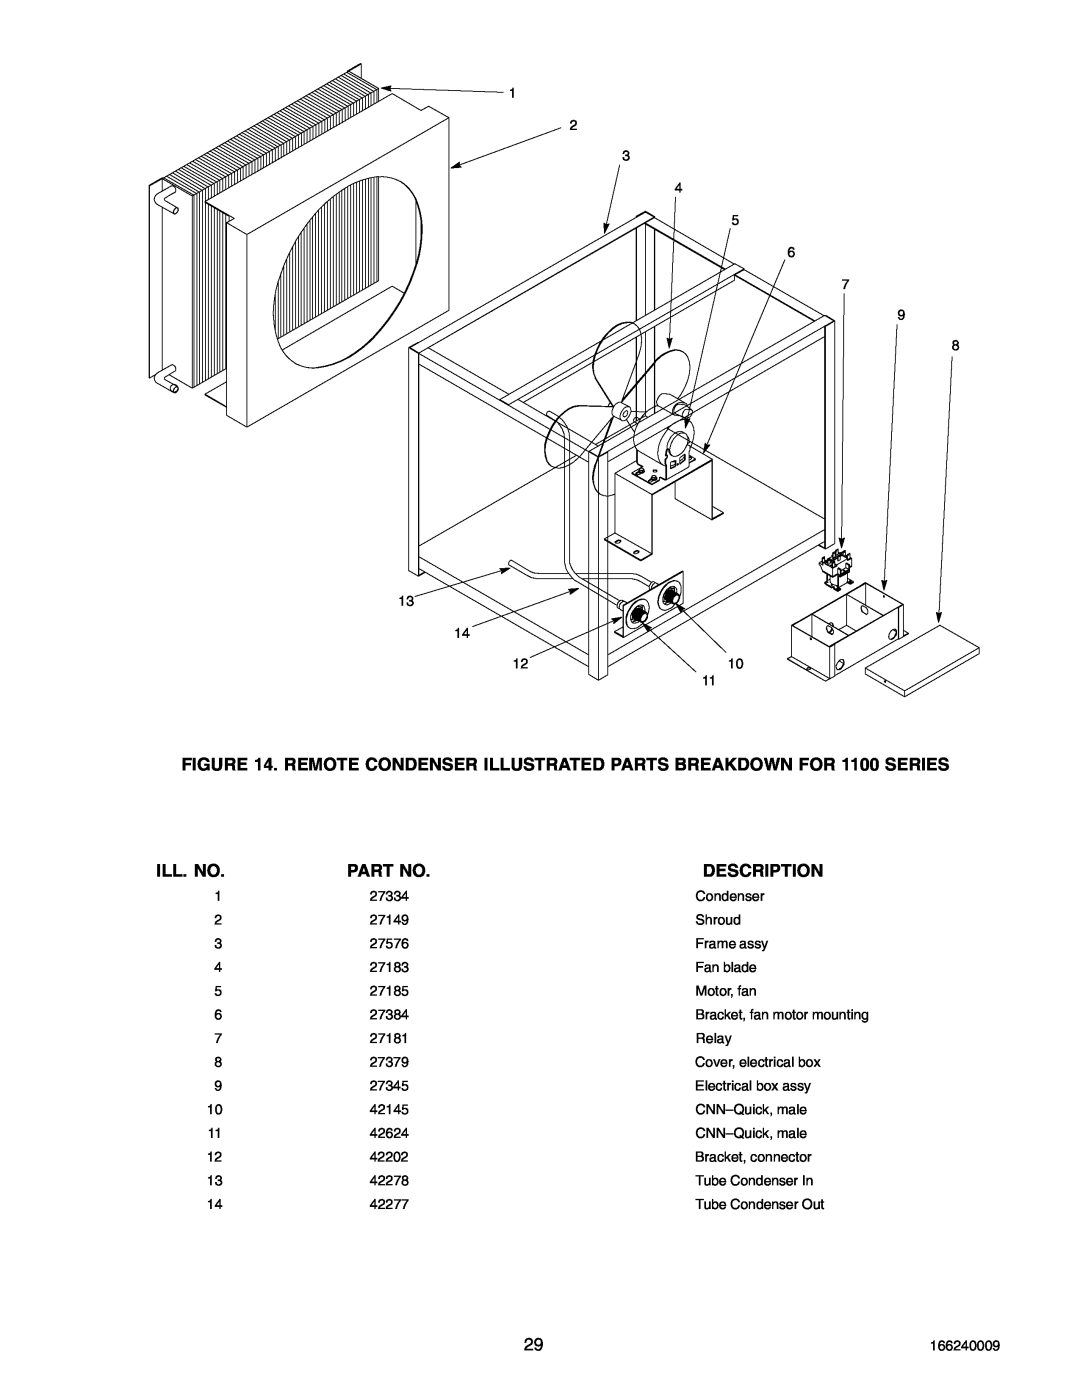 Cornelius 2400 (R404A), 750 (R404A), SERIES 1100 (R22) service manual Ill. No, Description, Bracket, fan motor mounting 